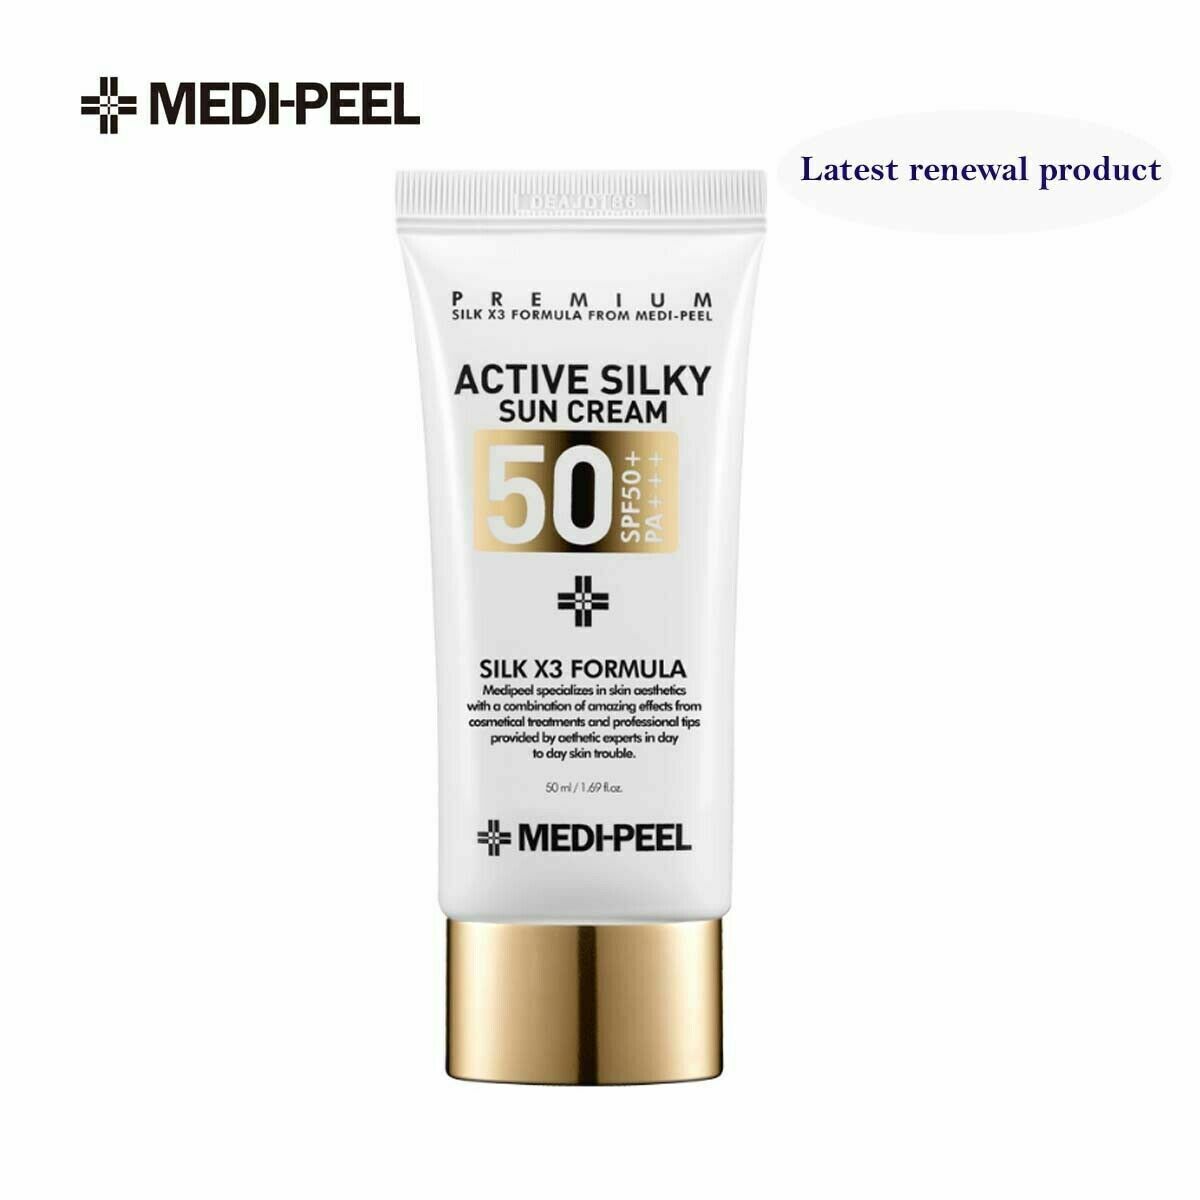 Medi-peel Premium Active Silky Sun Cream | 50ml SPF50+ PA+++ | Peptide Waterproof